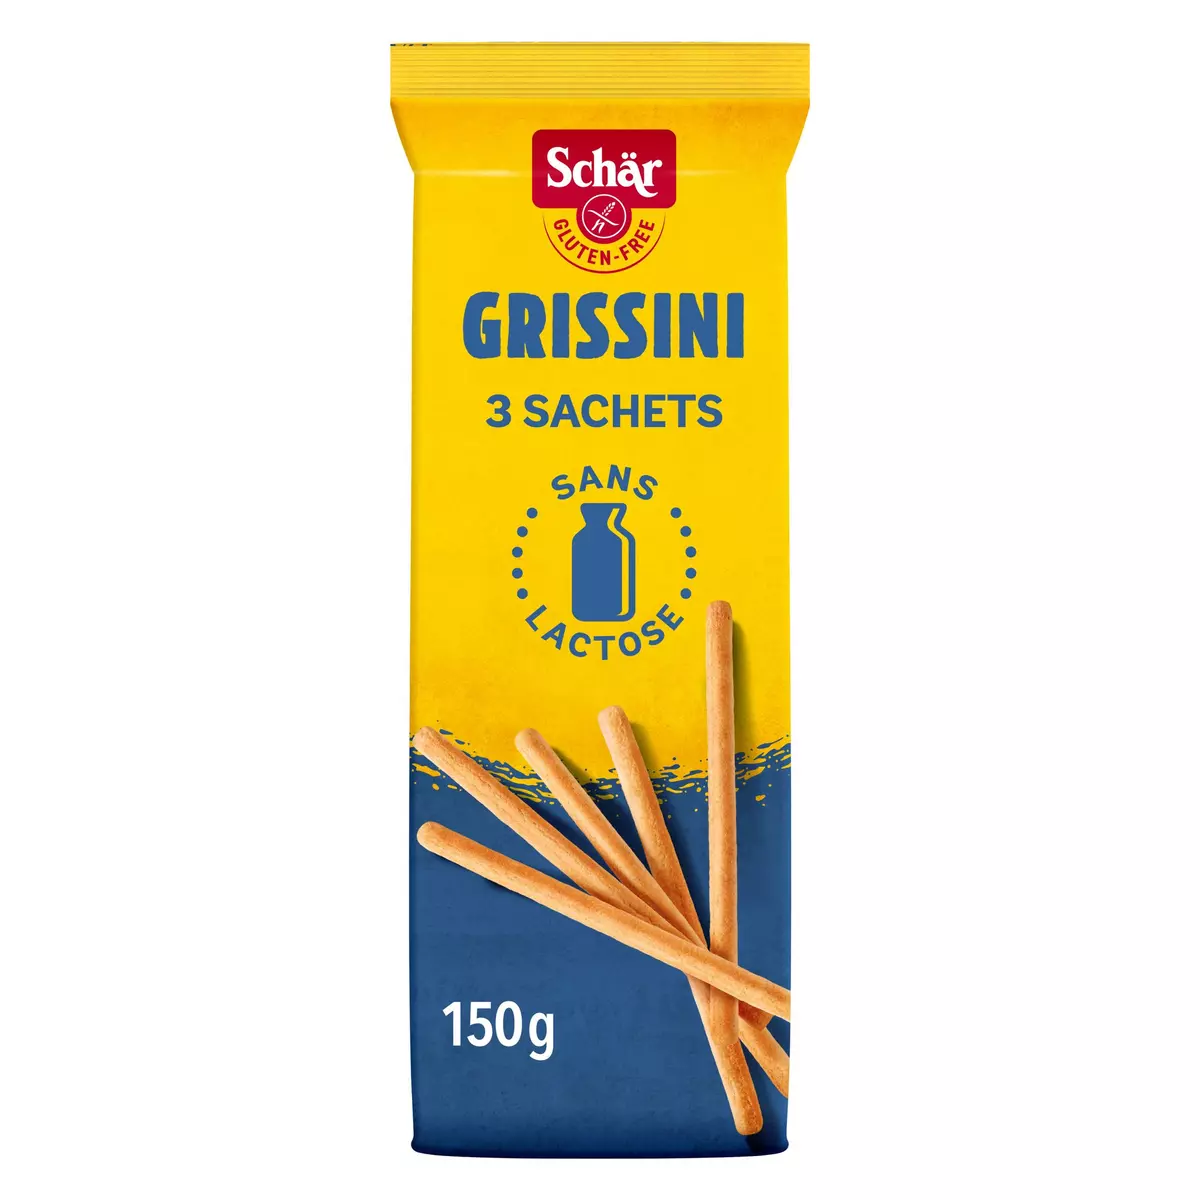 SCHAR Grissini sans gluten 3 sachets 150g